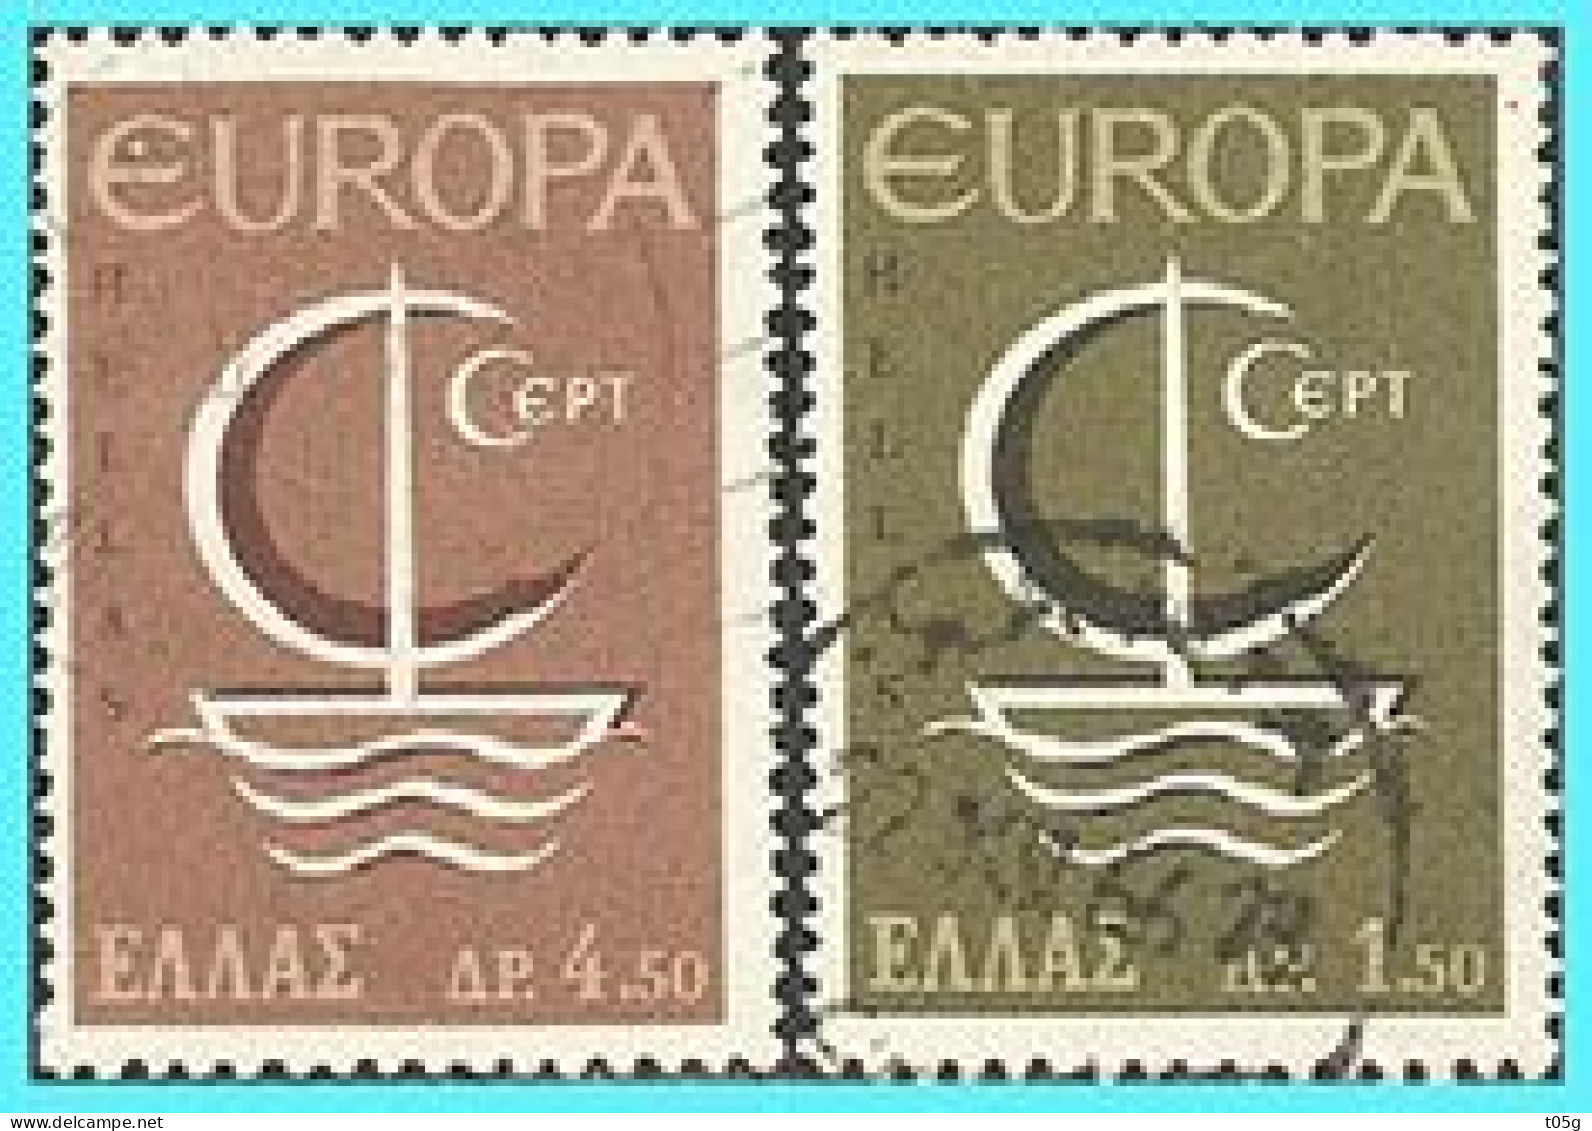 GREECE-GRECE - HELLAS 1966: Europa Compl Set Used - Oblitérés